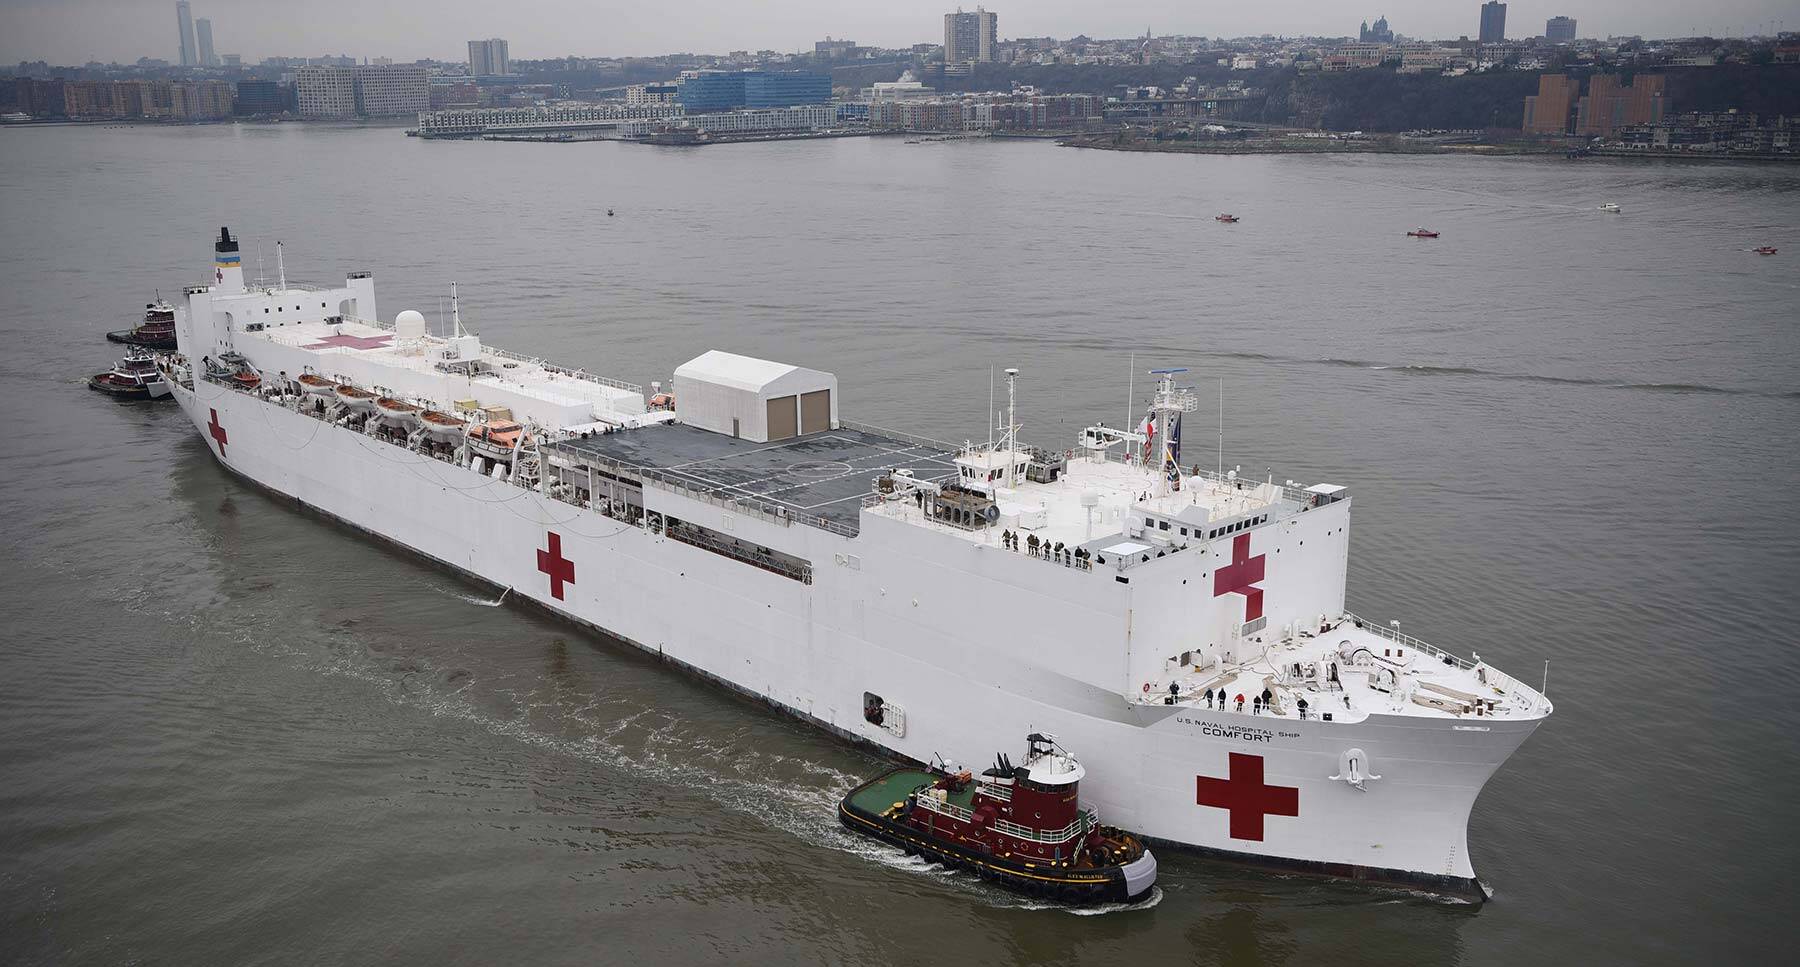 Hospital ship USNS Comfort New York